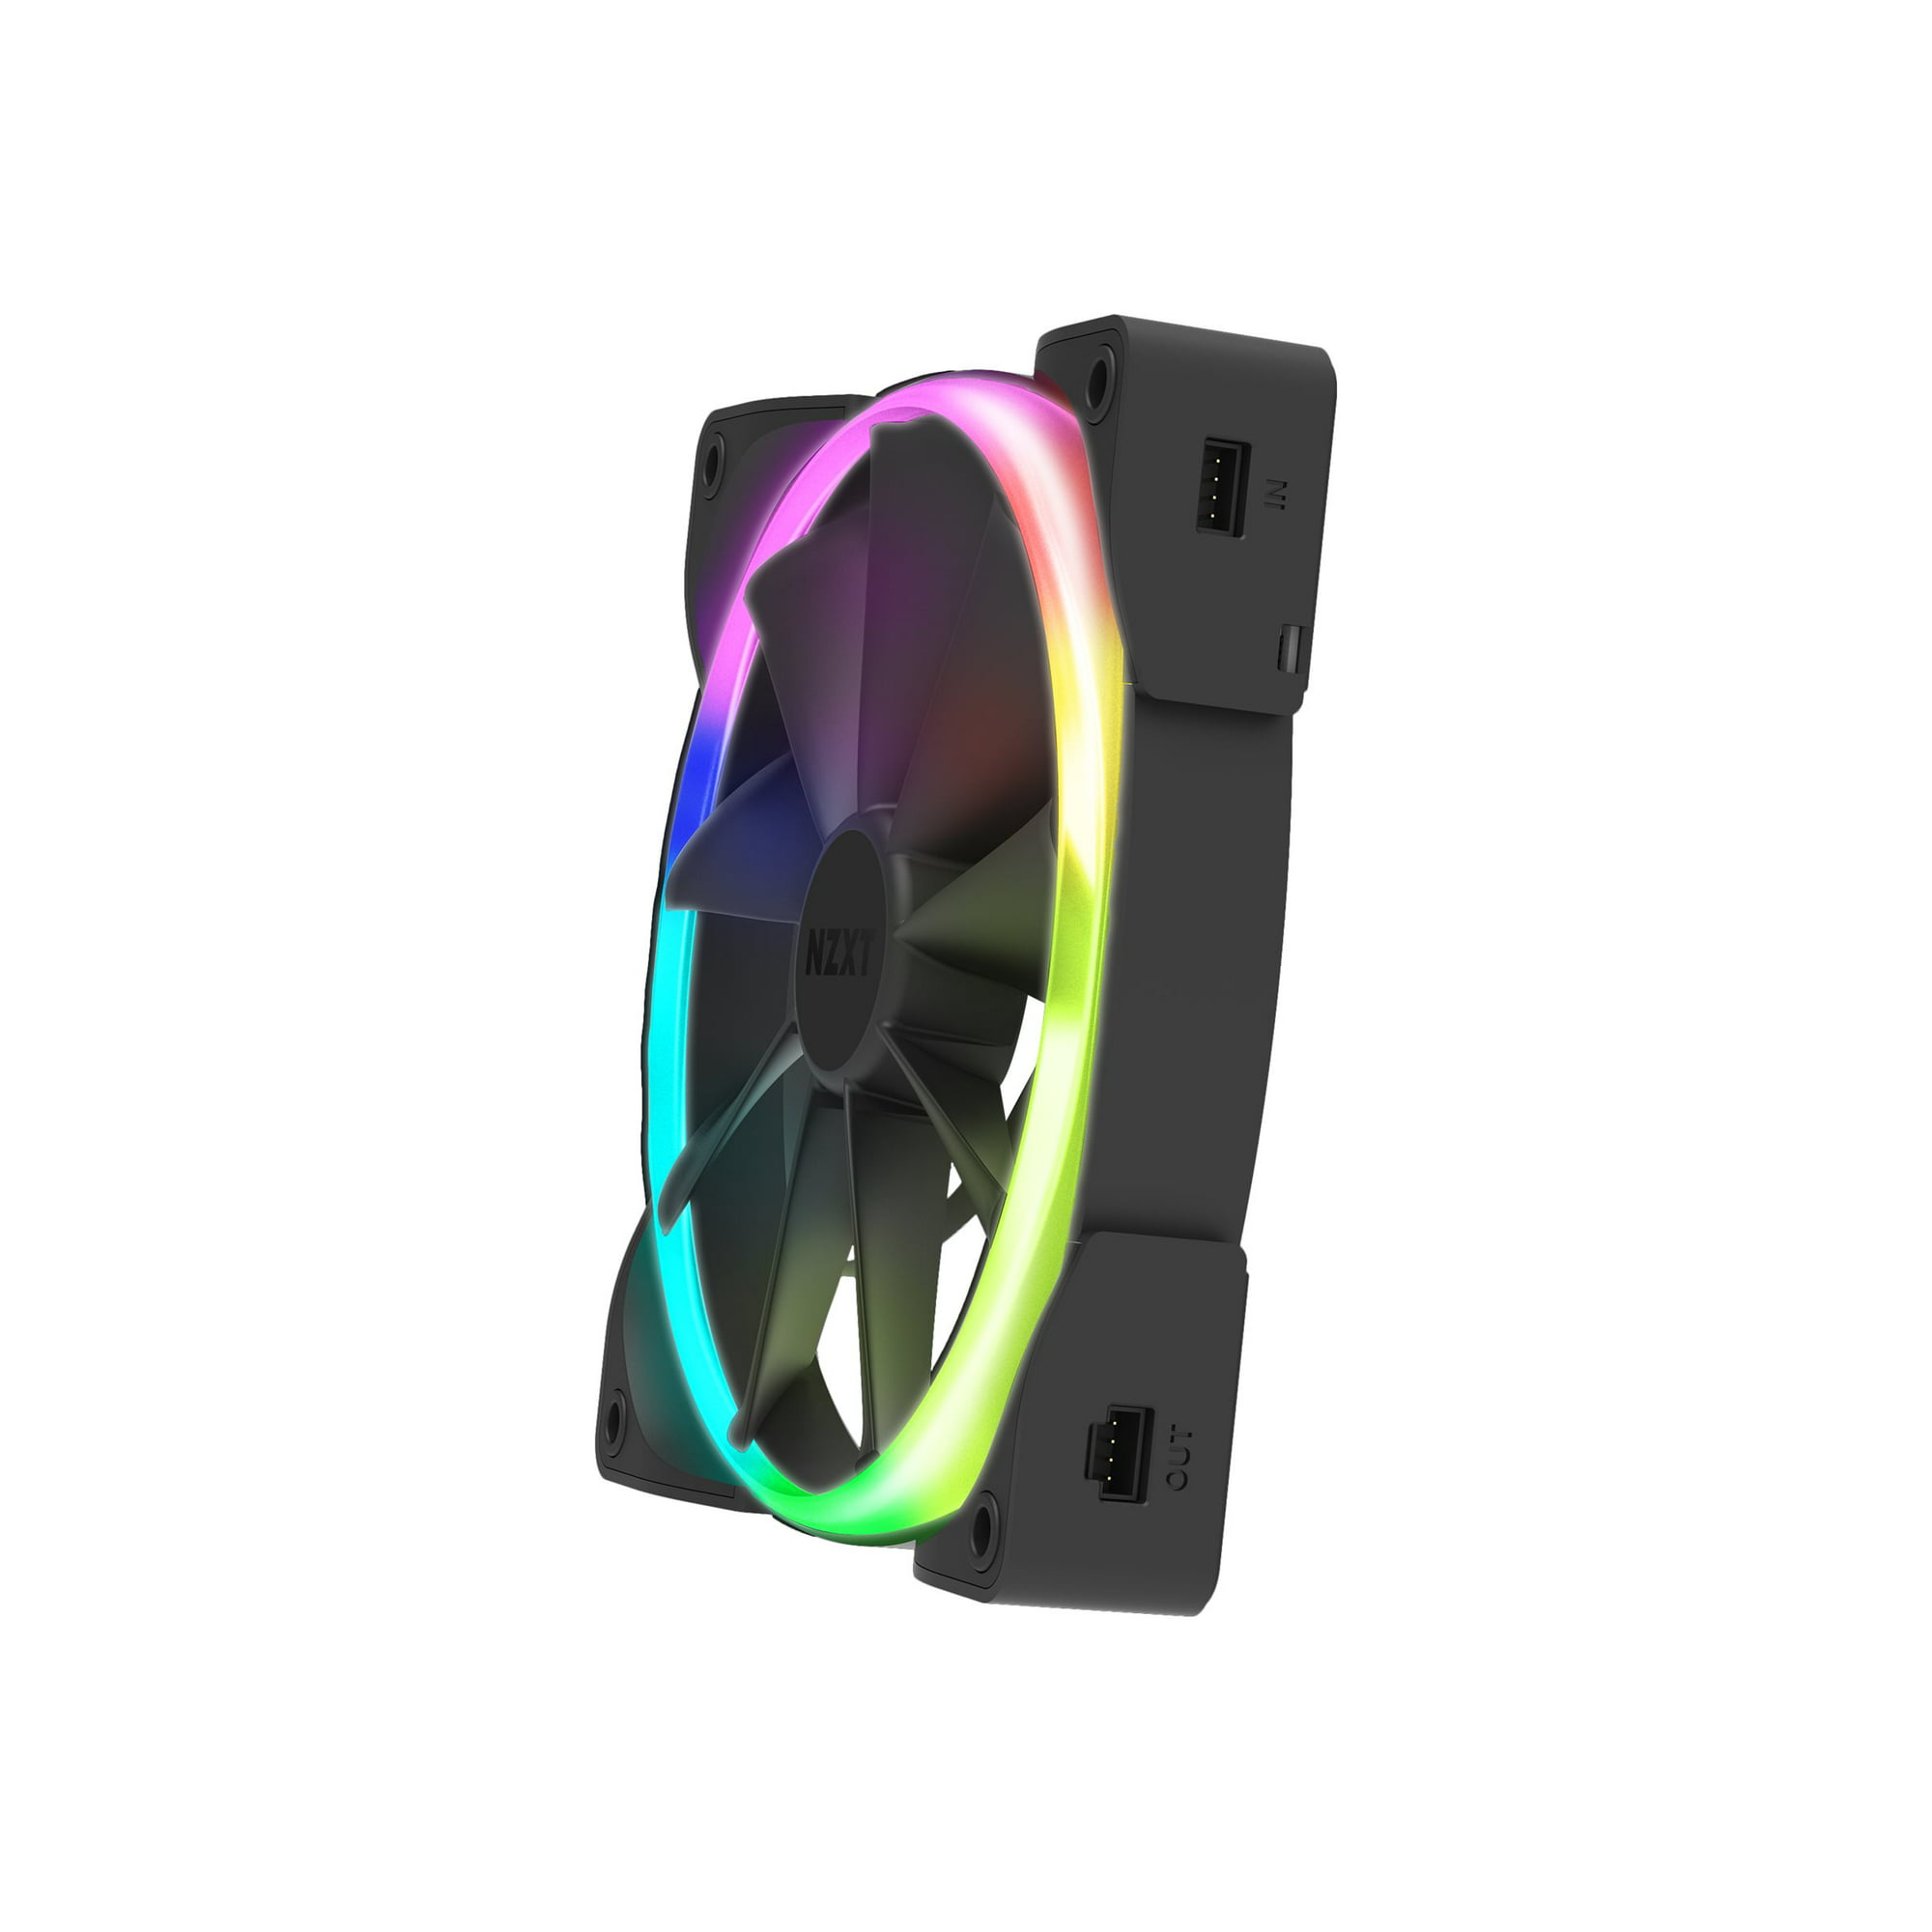 NZXT Aer RGB 2 - Case fan - 120 mm | Walmart Canada